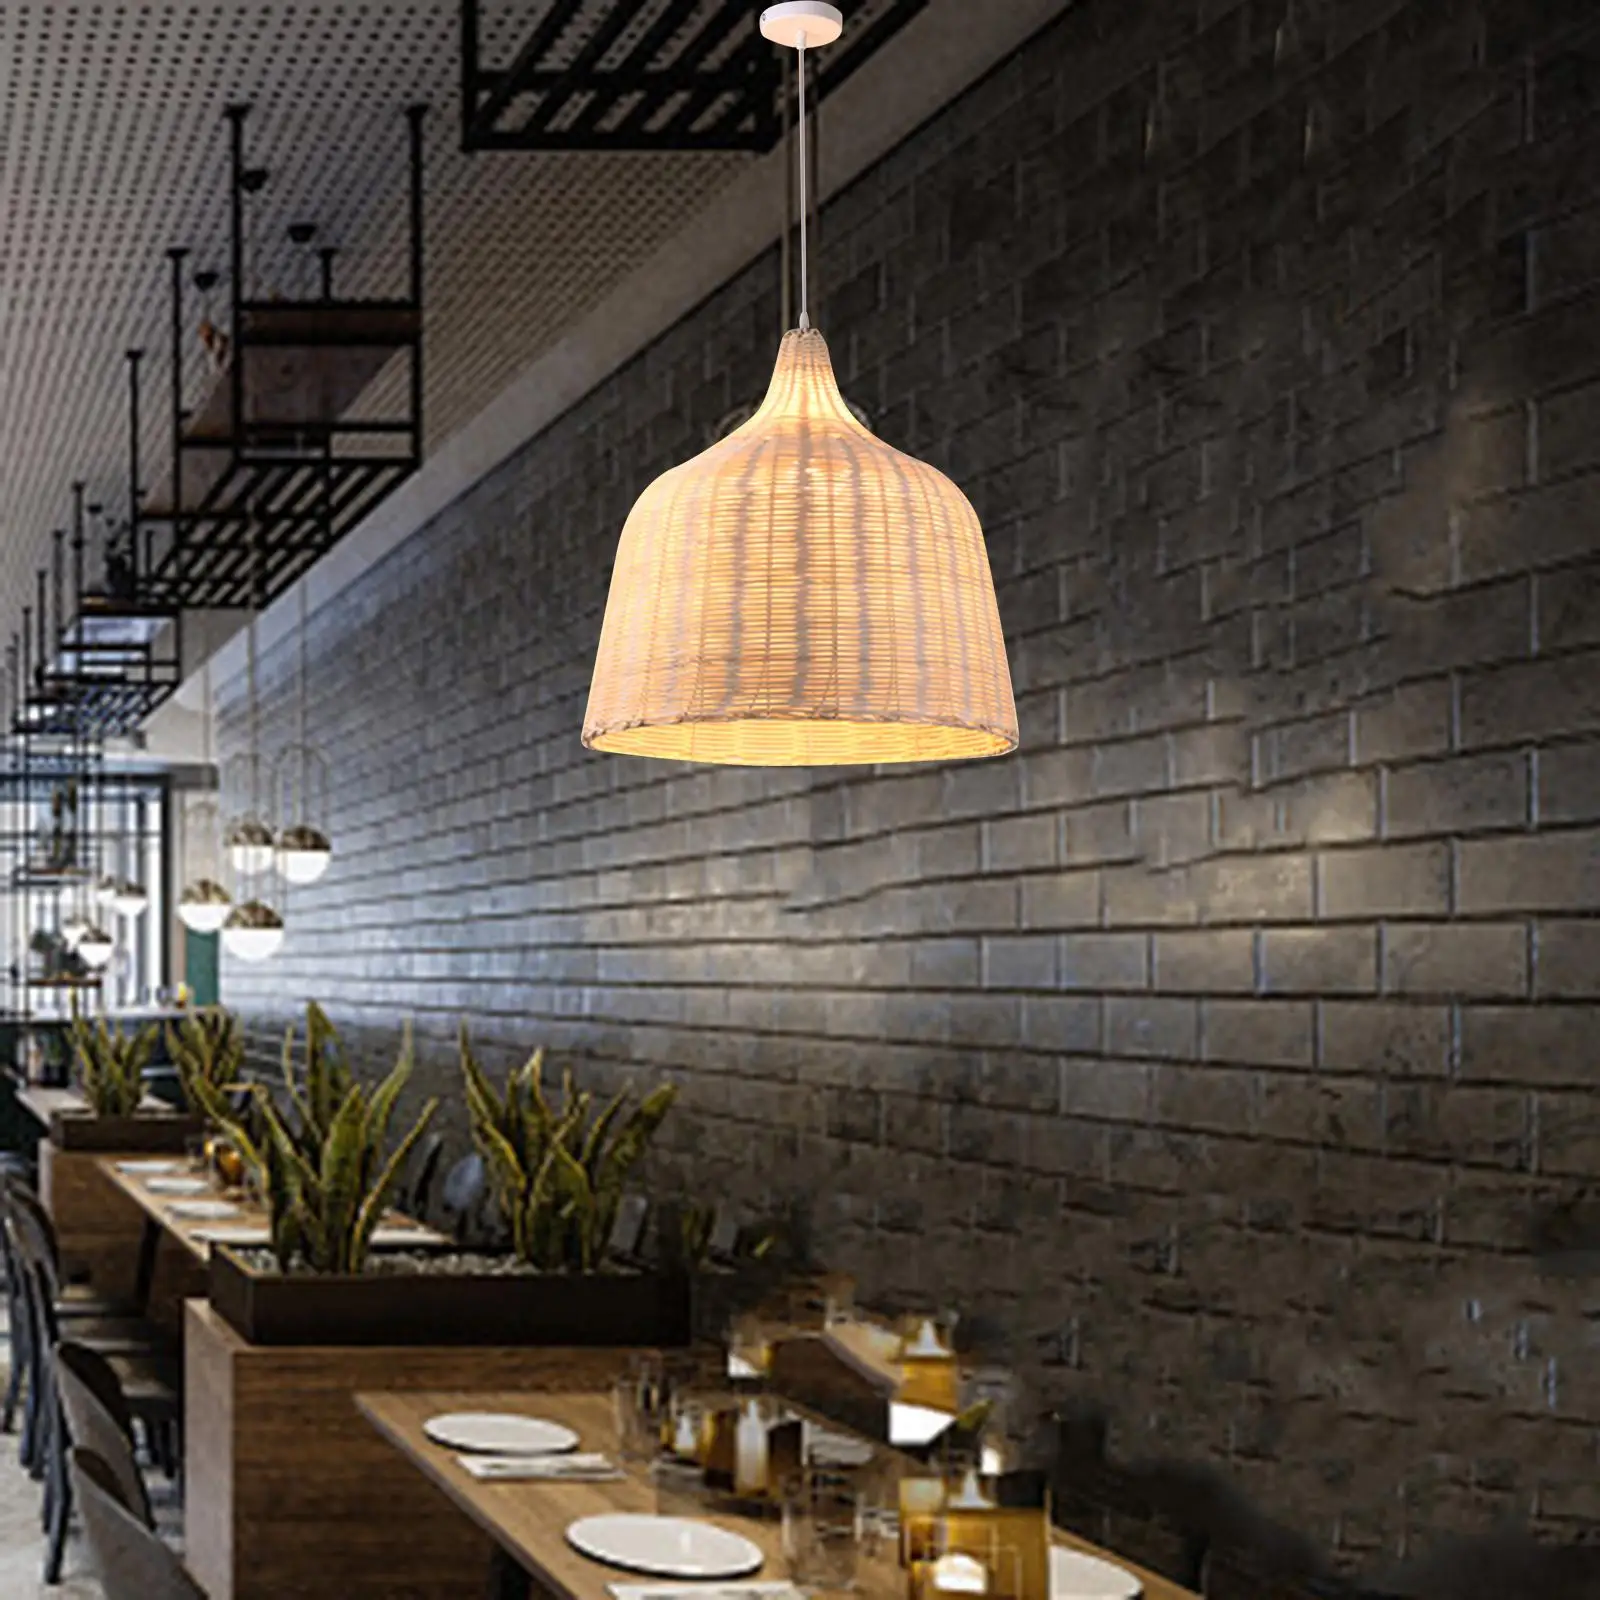 Creative Woven Pendant Lamp Shade Lighting Fixture Weaving Chandelier Rustic Light Shade for Kitchen Porch Restaurant Decor